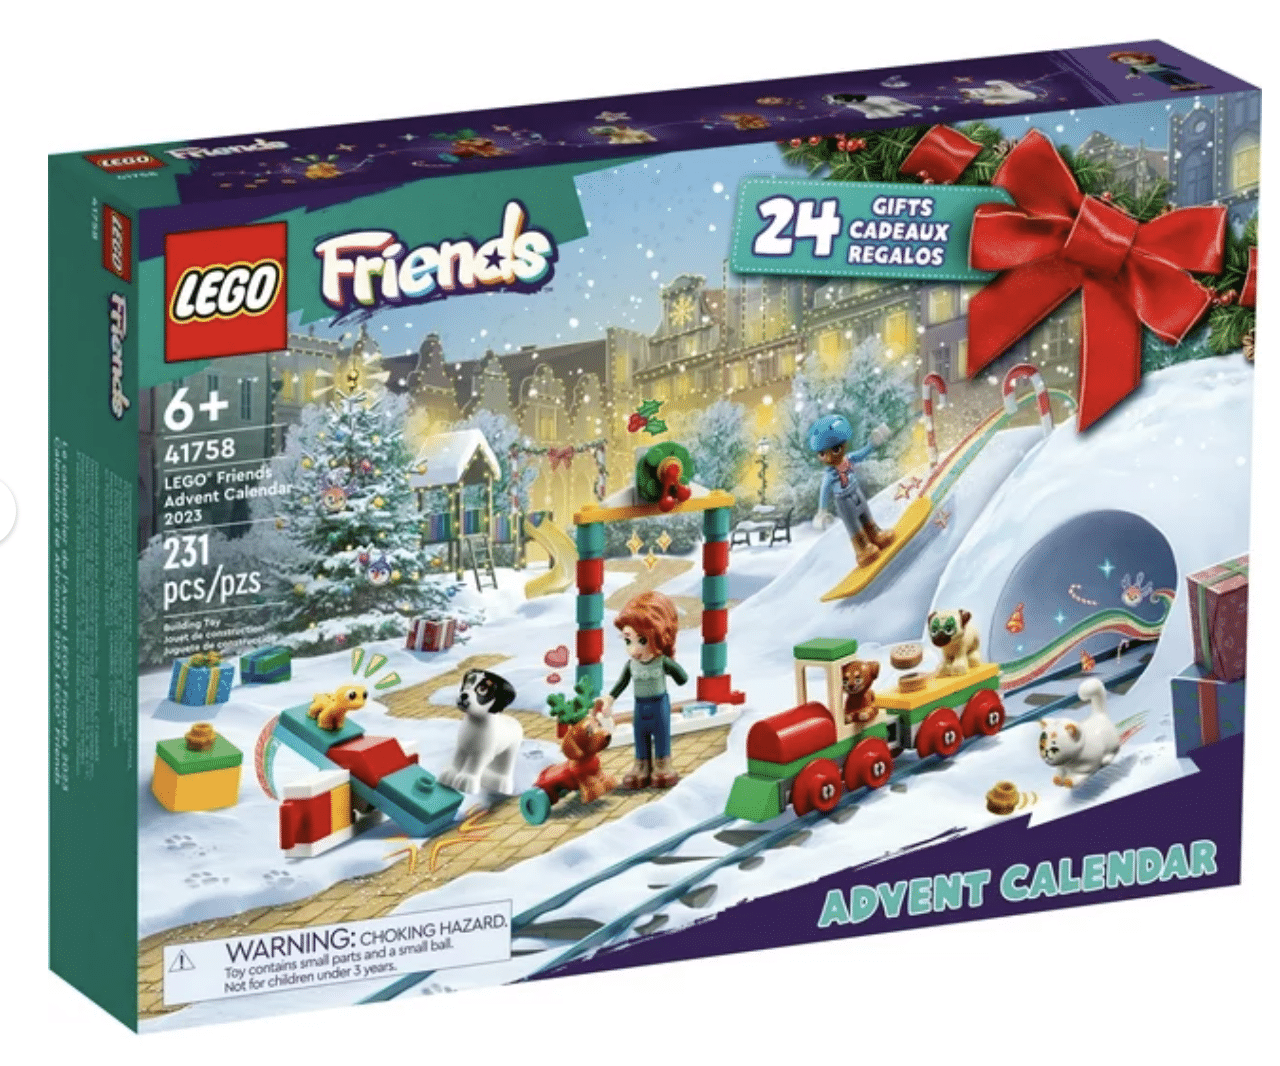 Lego Friends advent calendar. 